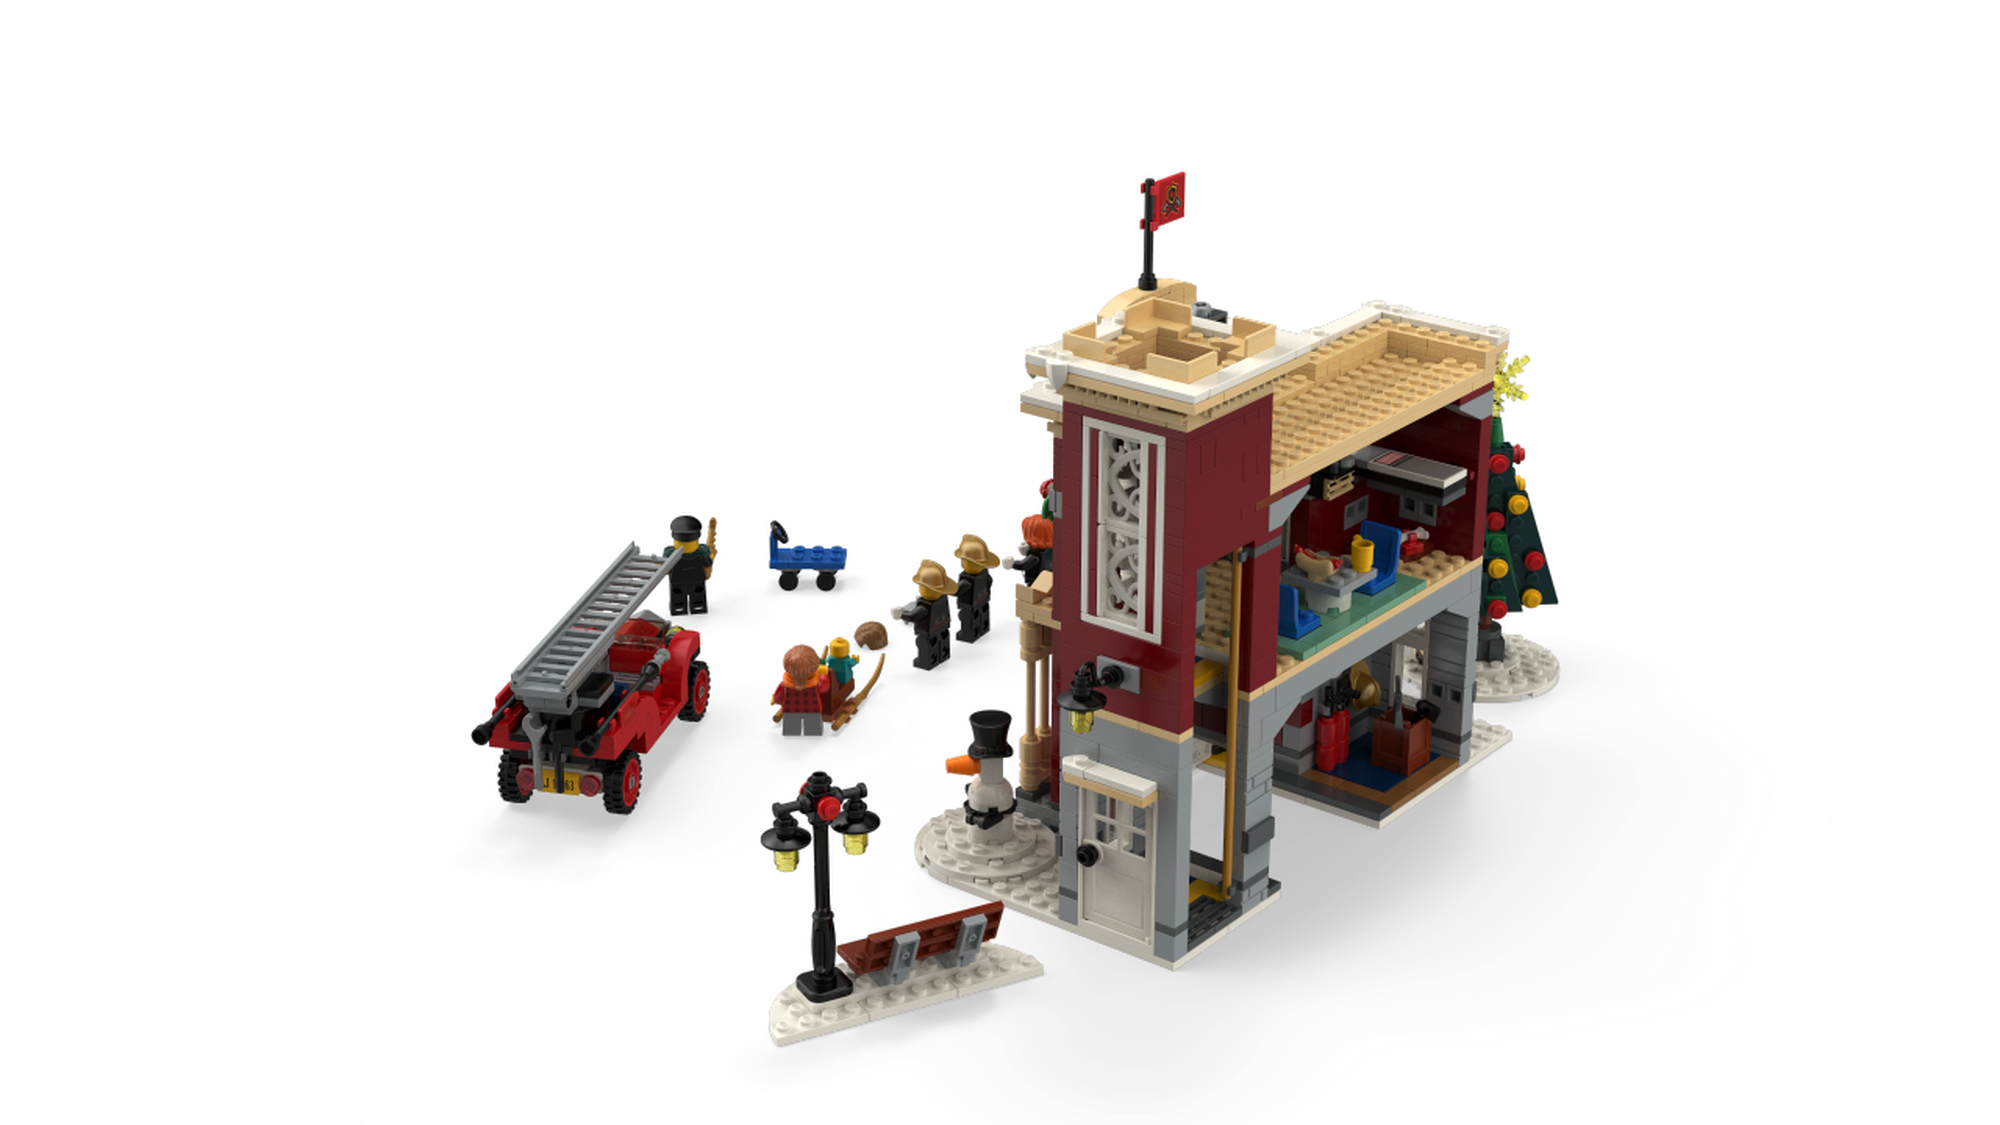 10263 - Creator Caserma Pompieri invernale by Lego